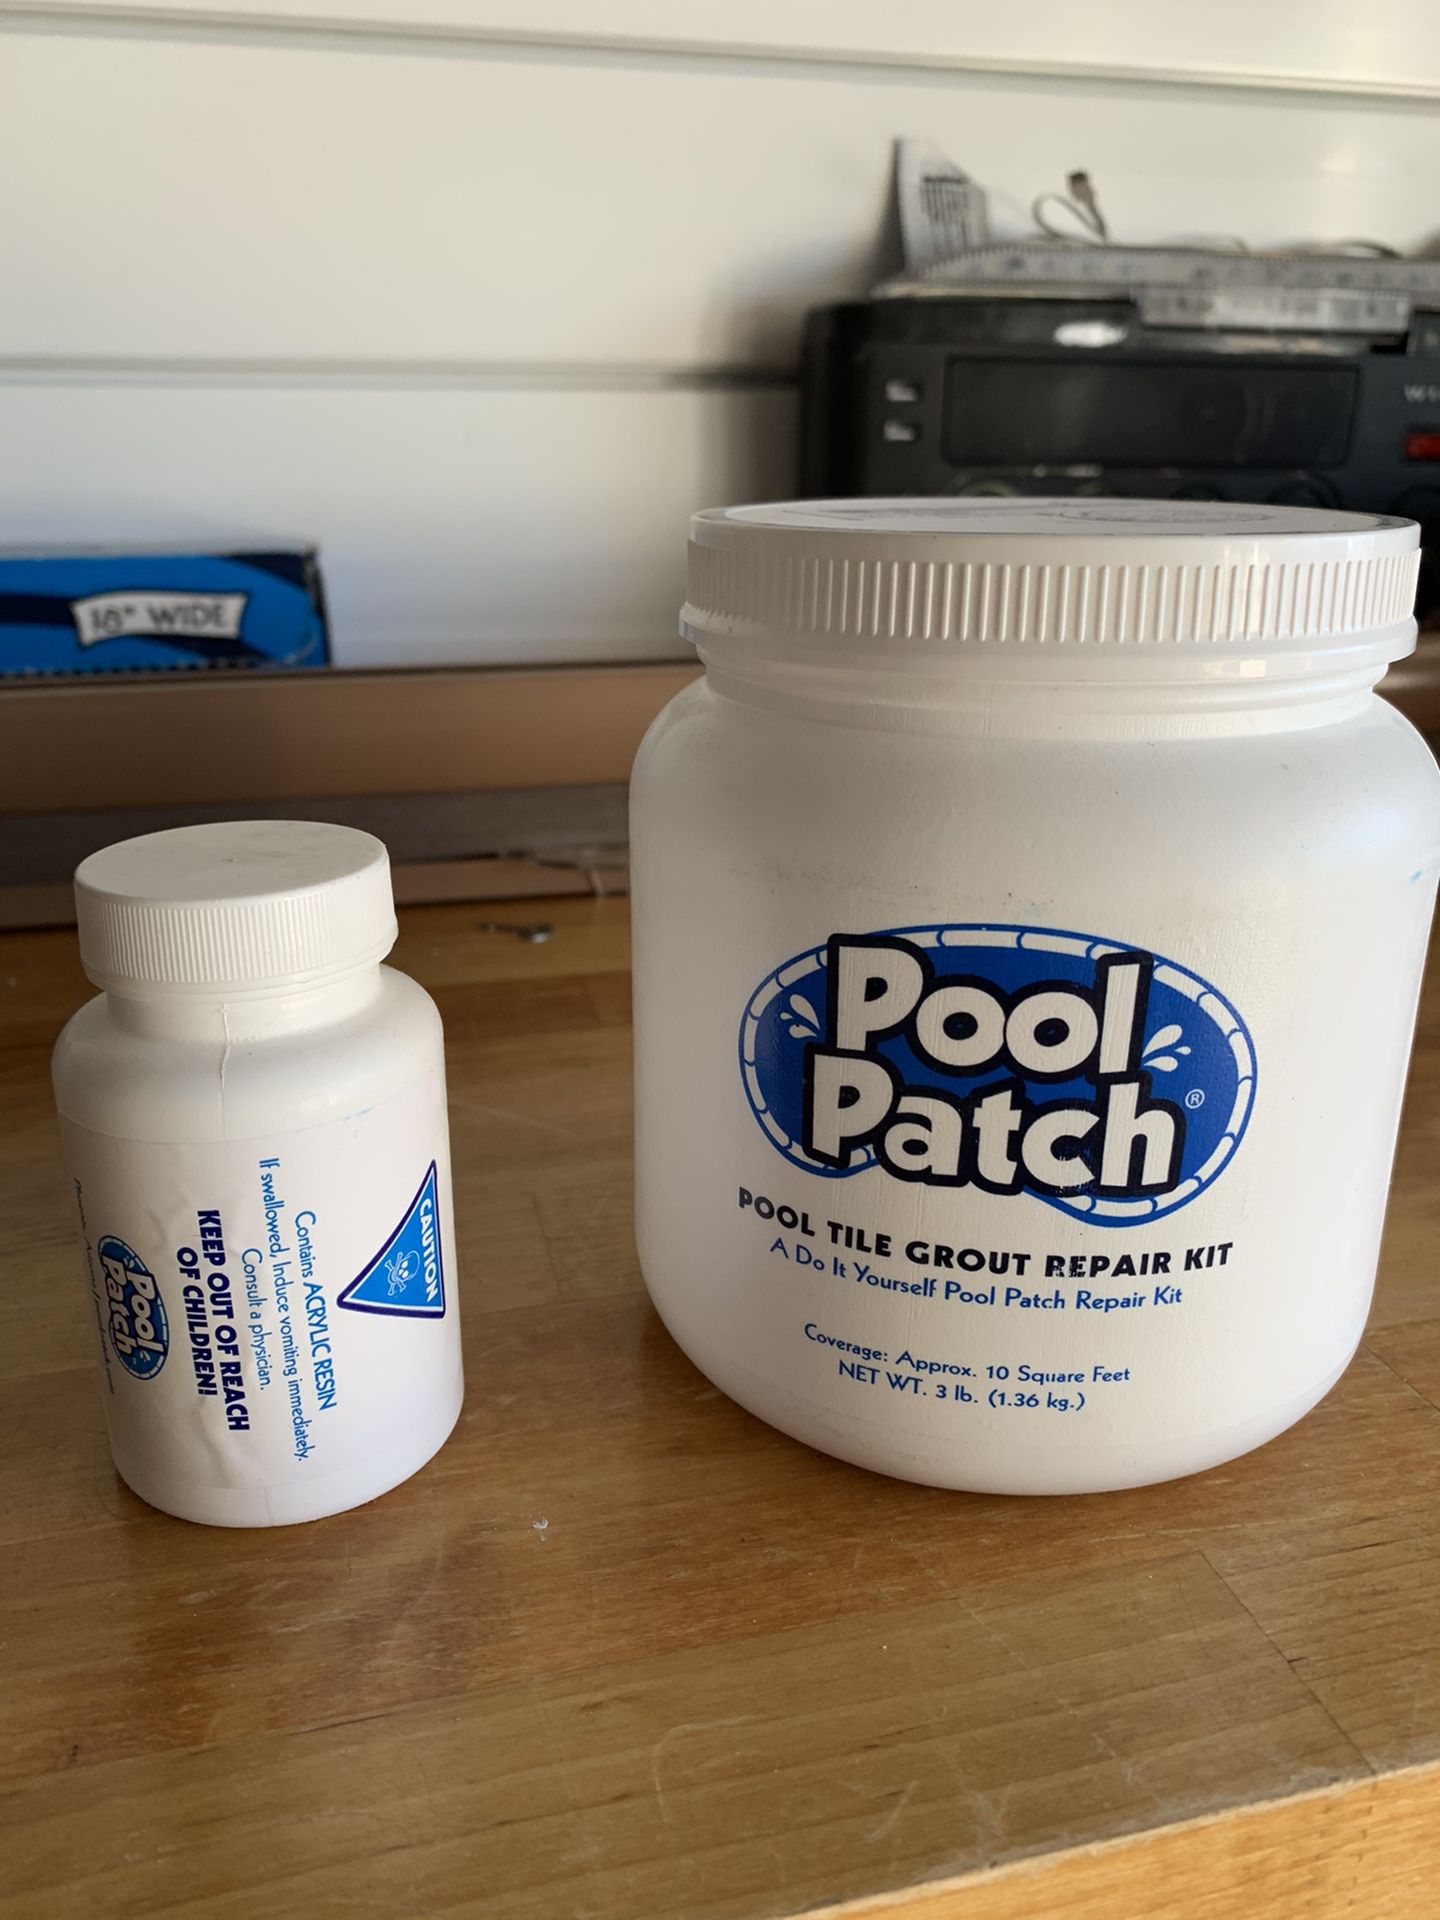 Pool Patch pool tile grout repair kit